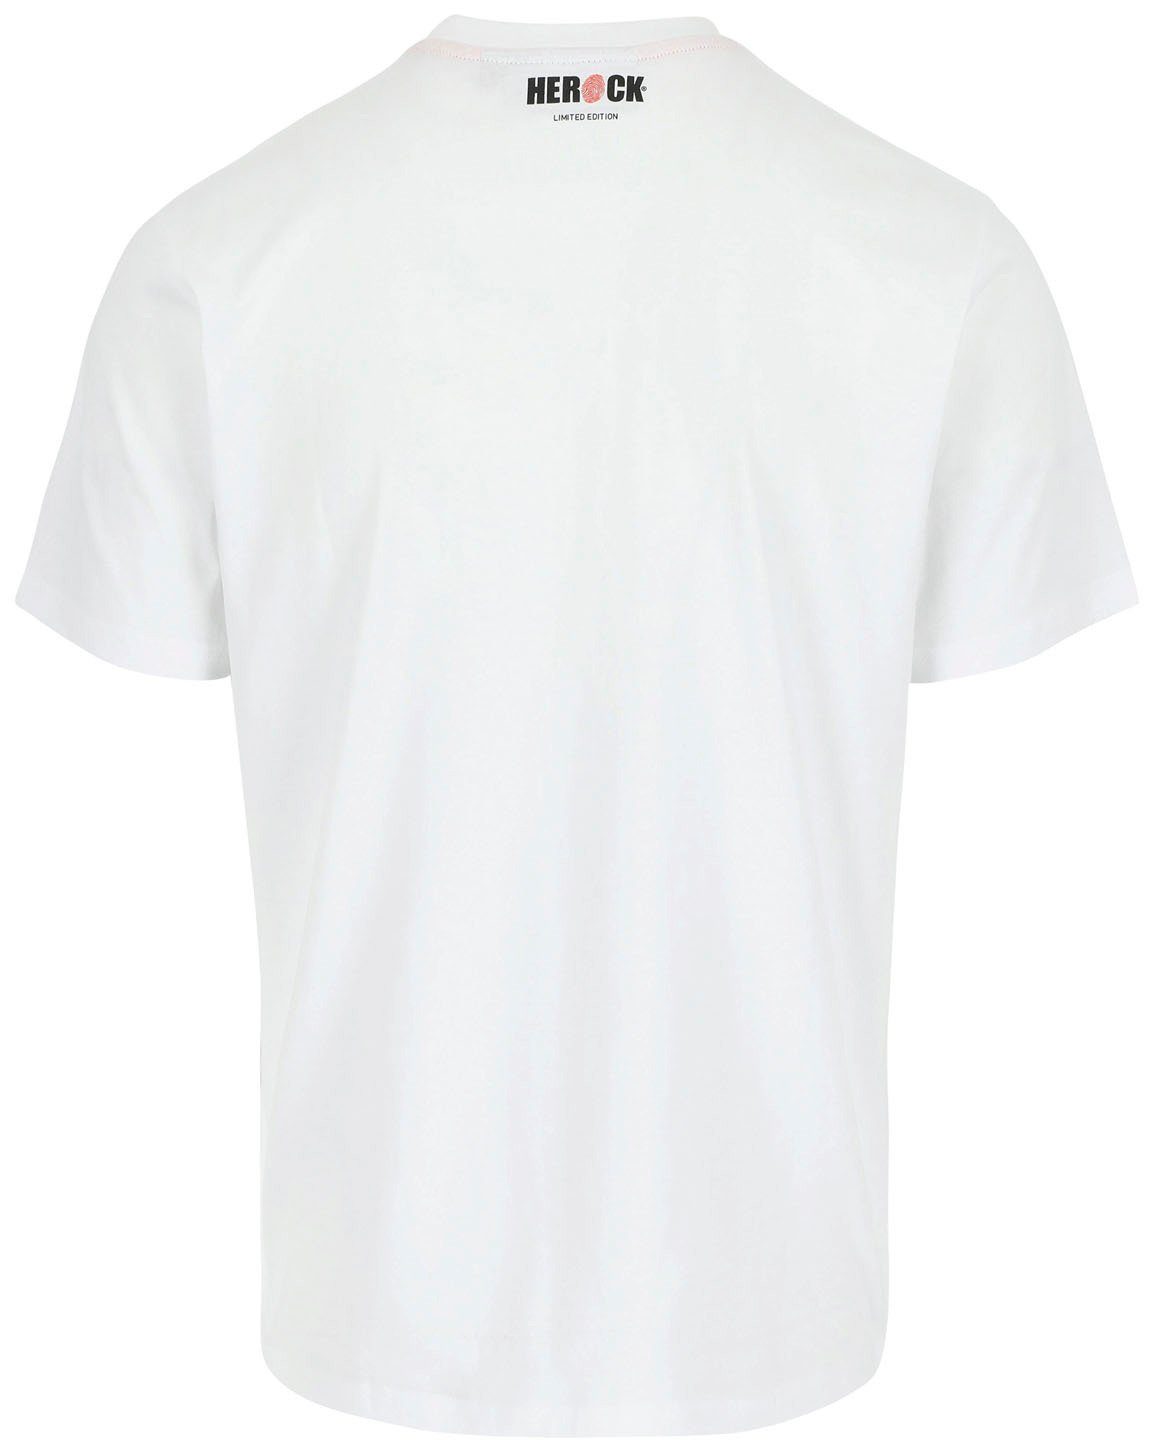 Herock T-Shirt Skullo Edition Limited